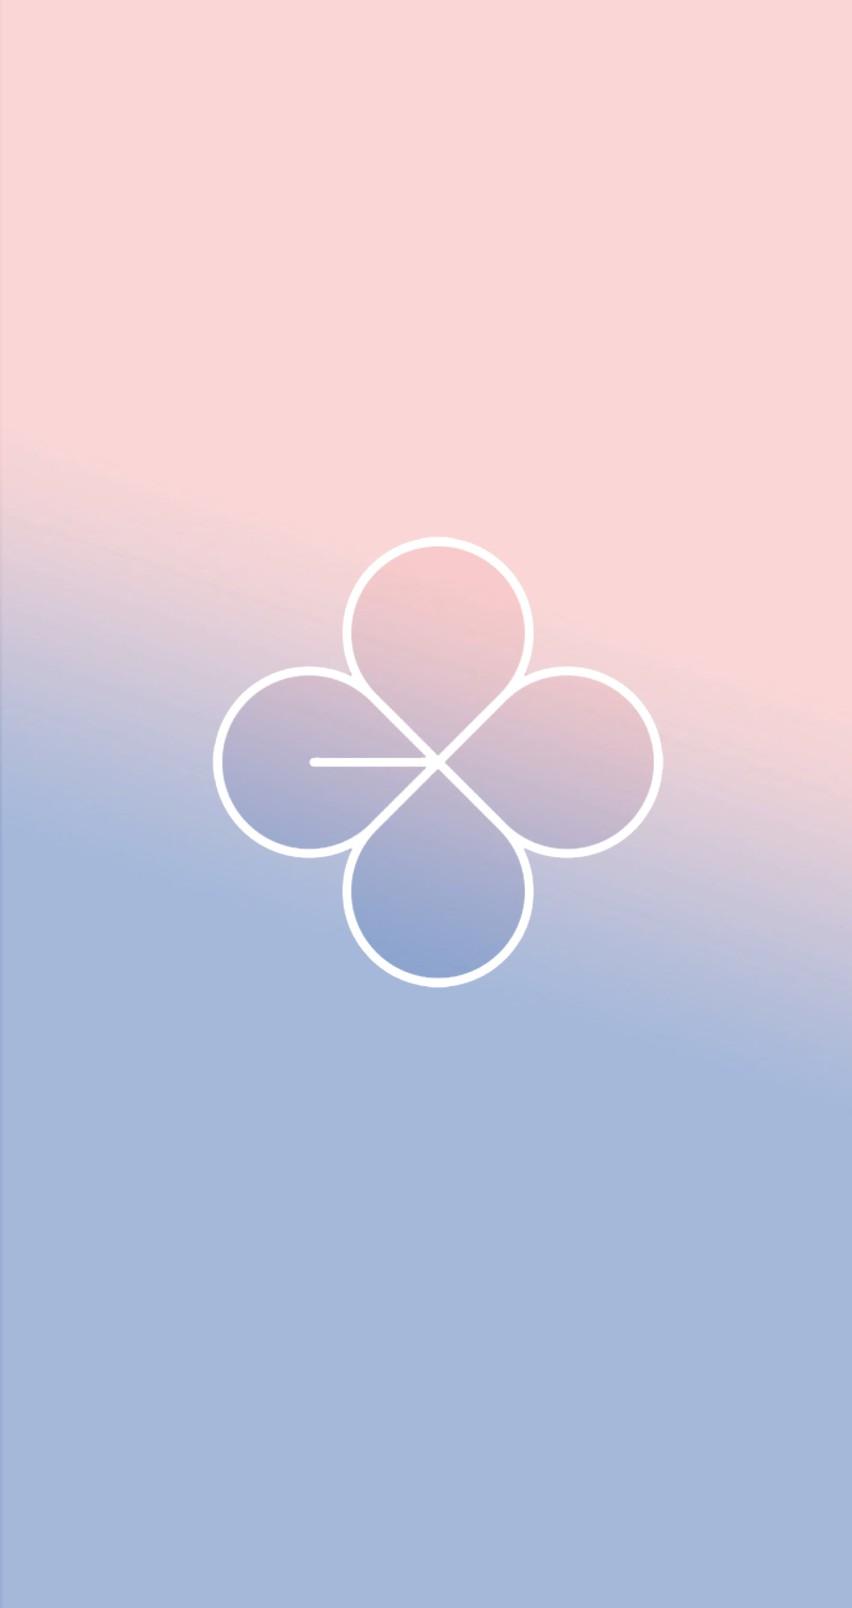 Exo Wallpaper Exo Symbol Logo Aesthetic